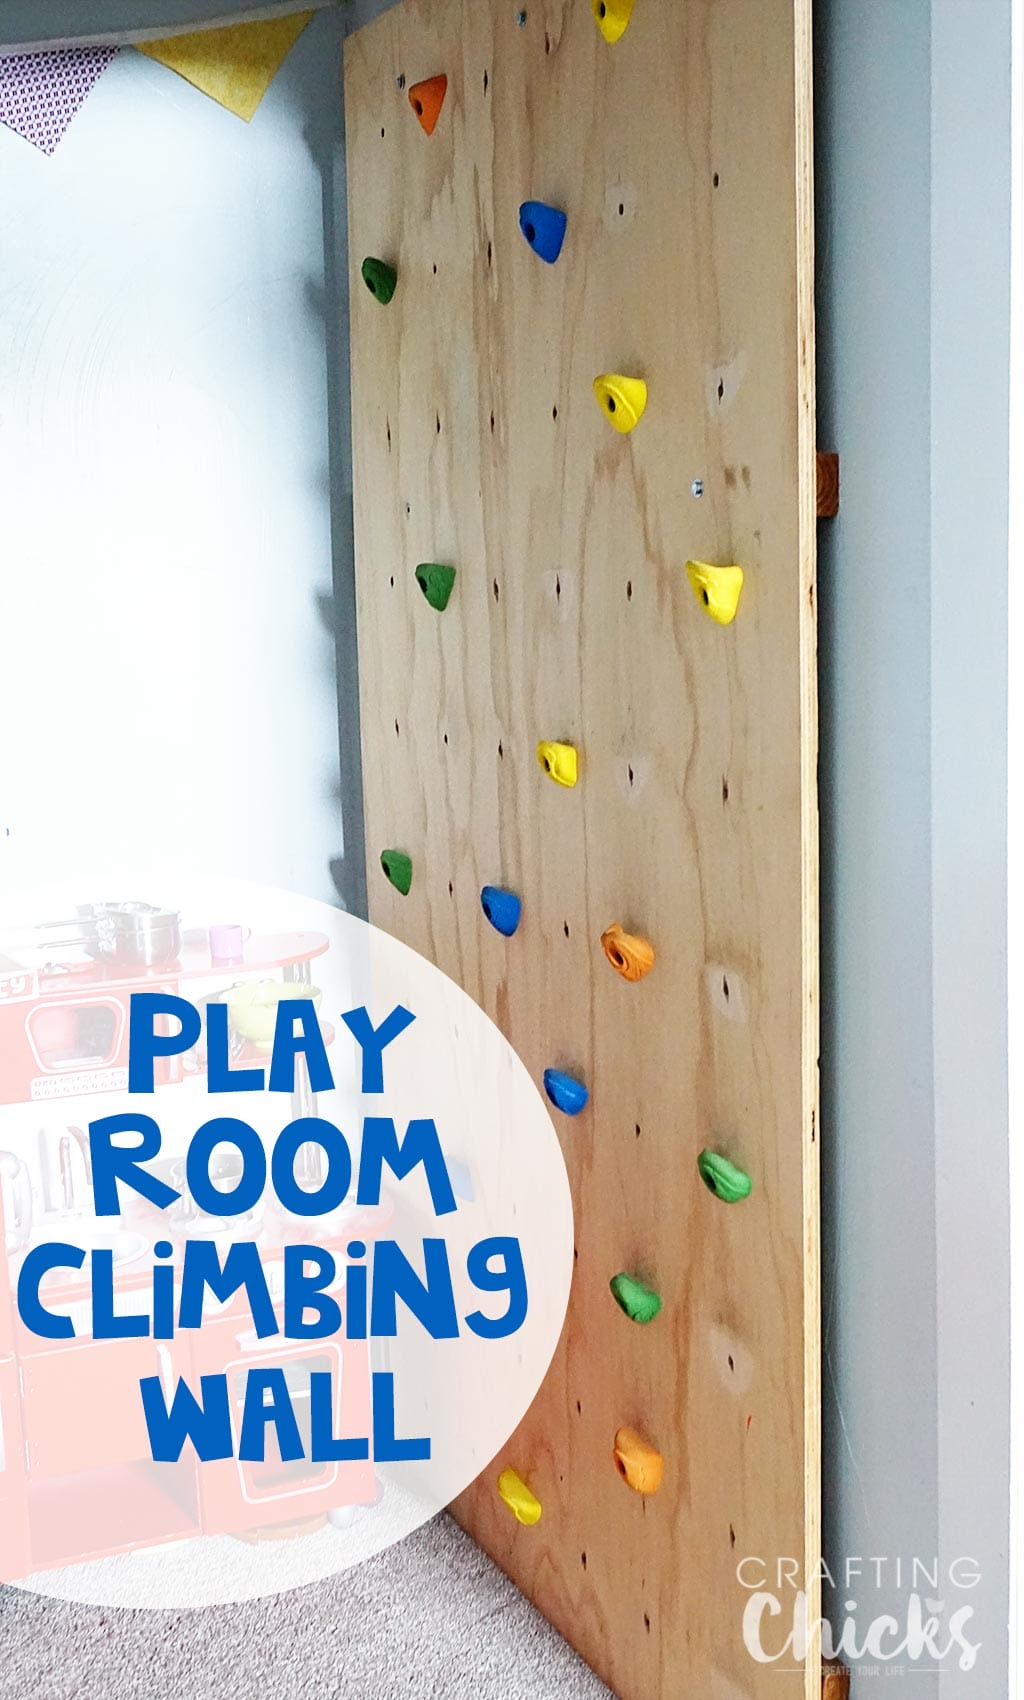 Play Room Climbing Wall